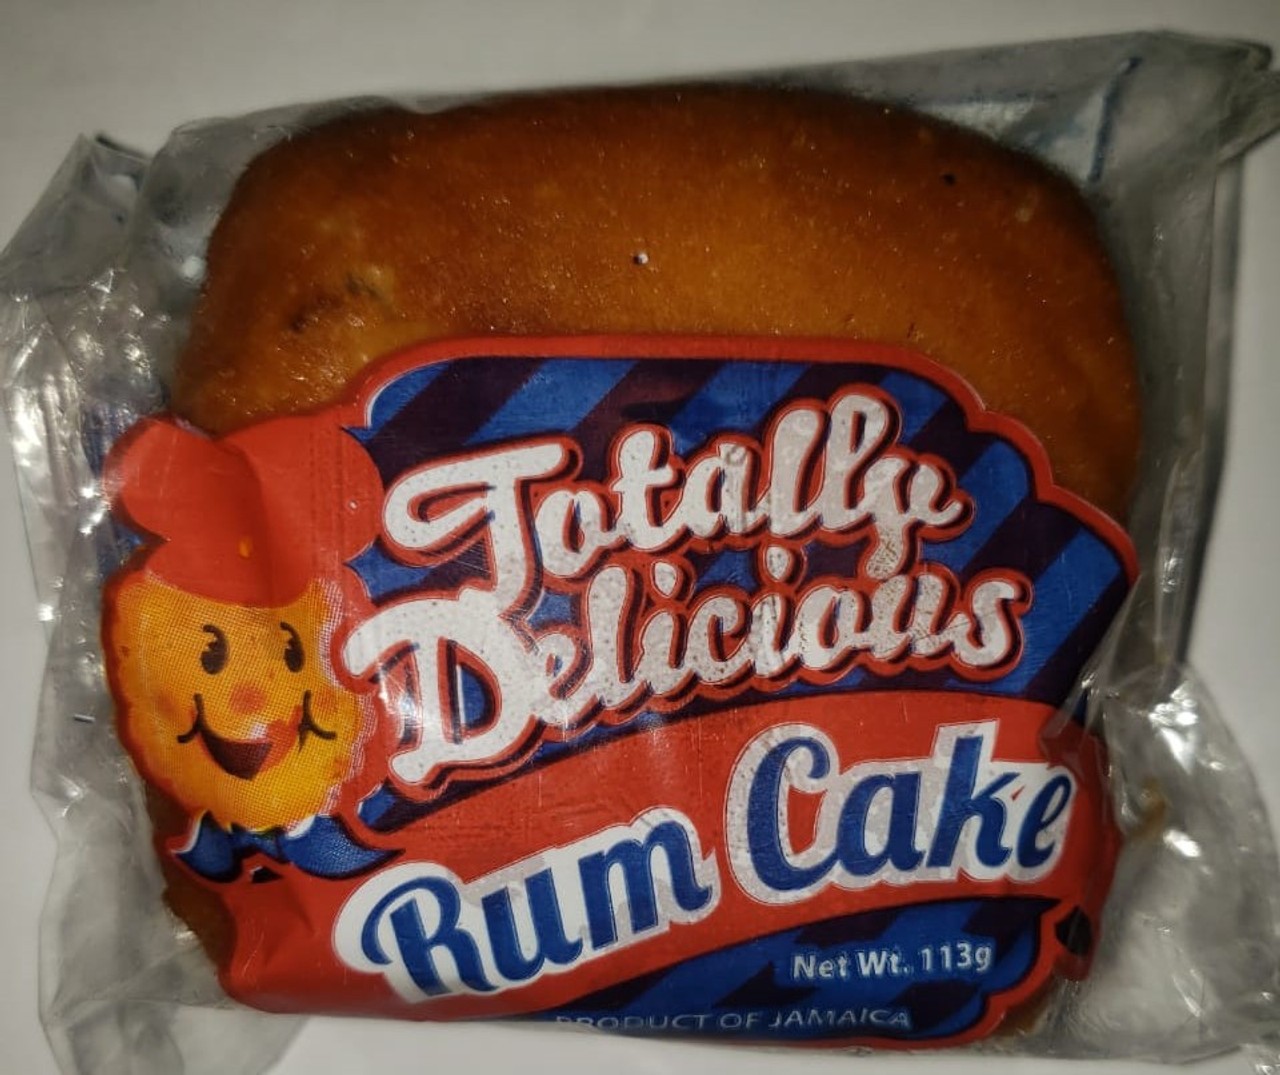 Totally Delicious Rum Cake